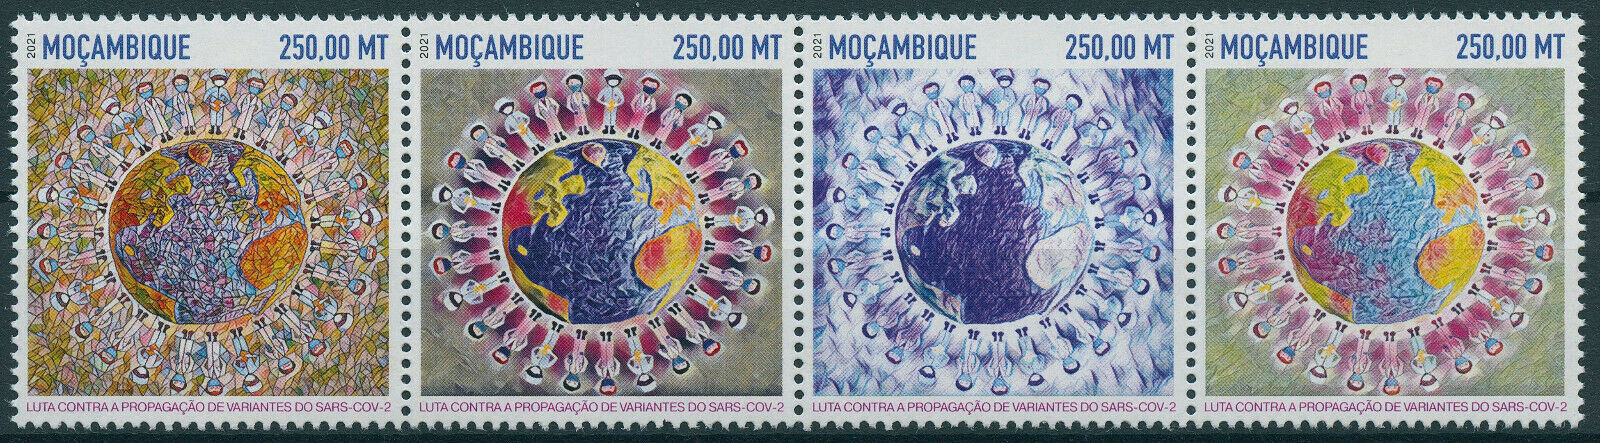 Mozambique 2021 MNH Medical Stamps Corona Fight SARS-Cov-2 Variants Covid-19 Covid 4v Strip